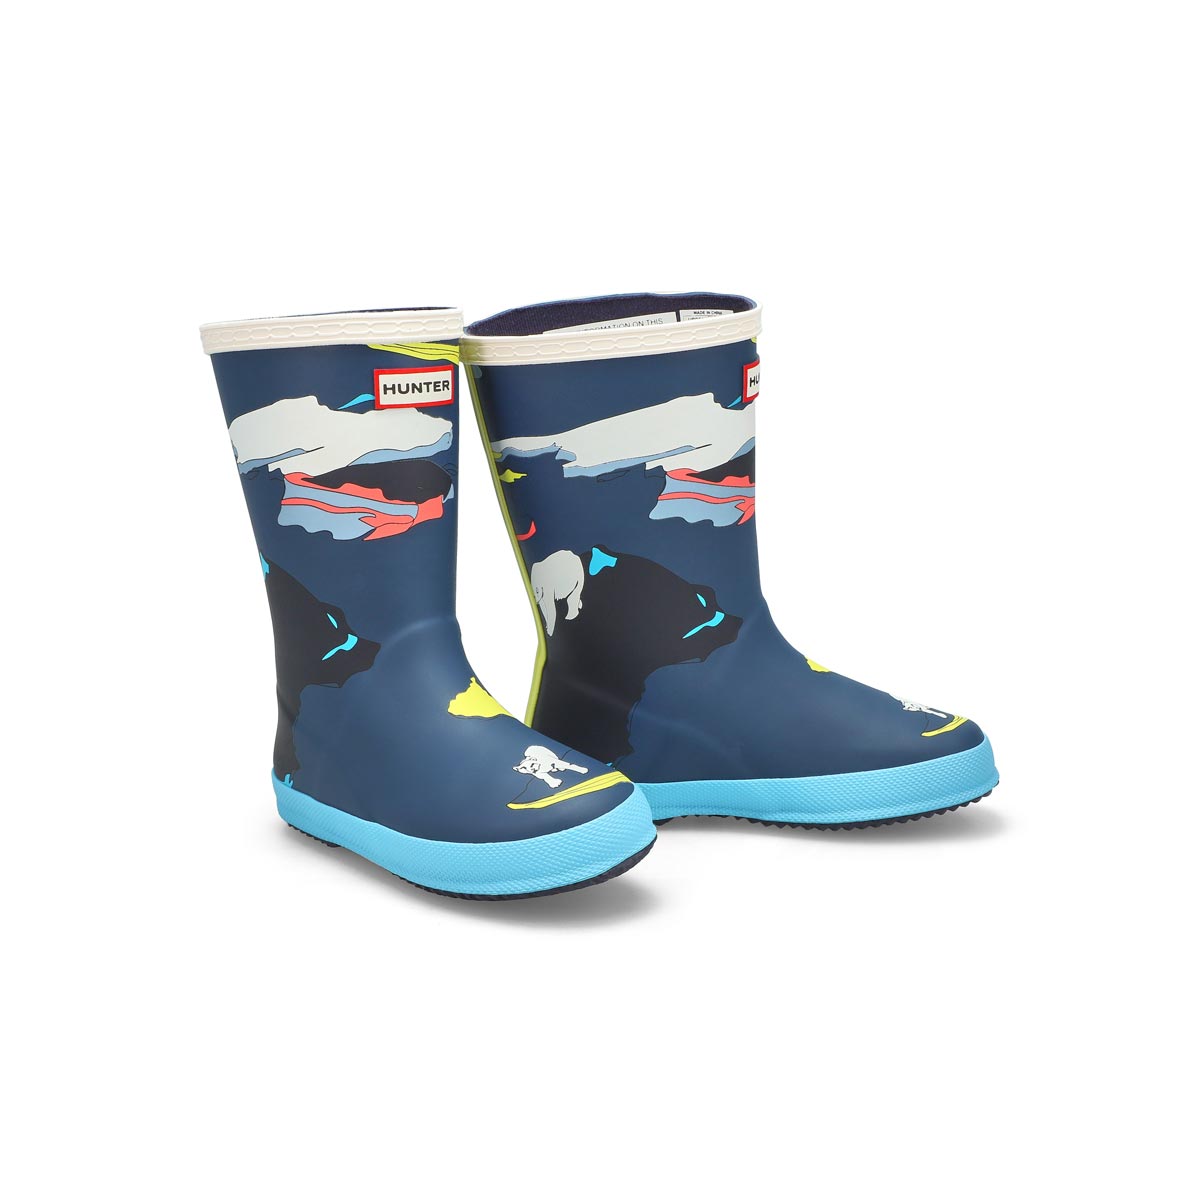 Infants' First Classic IceBerg Rain Boot - Navy